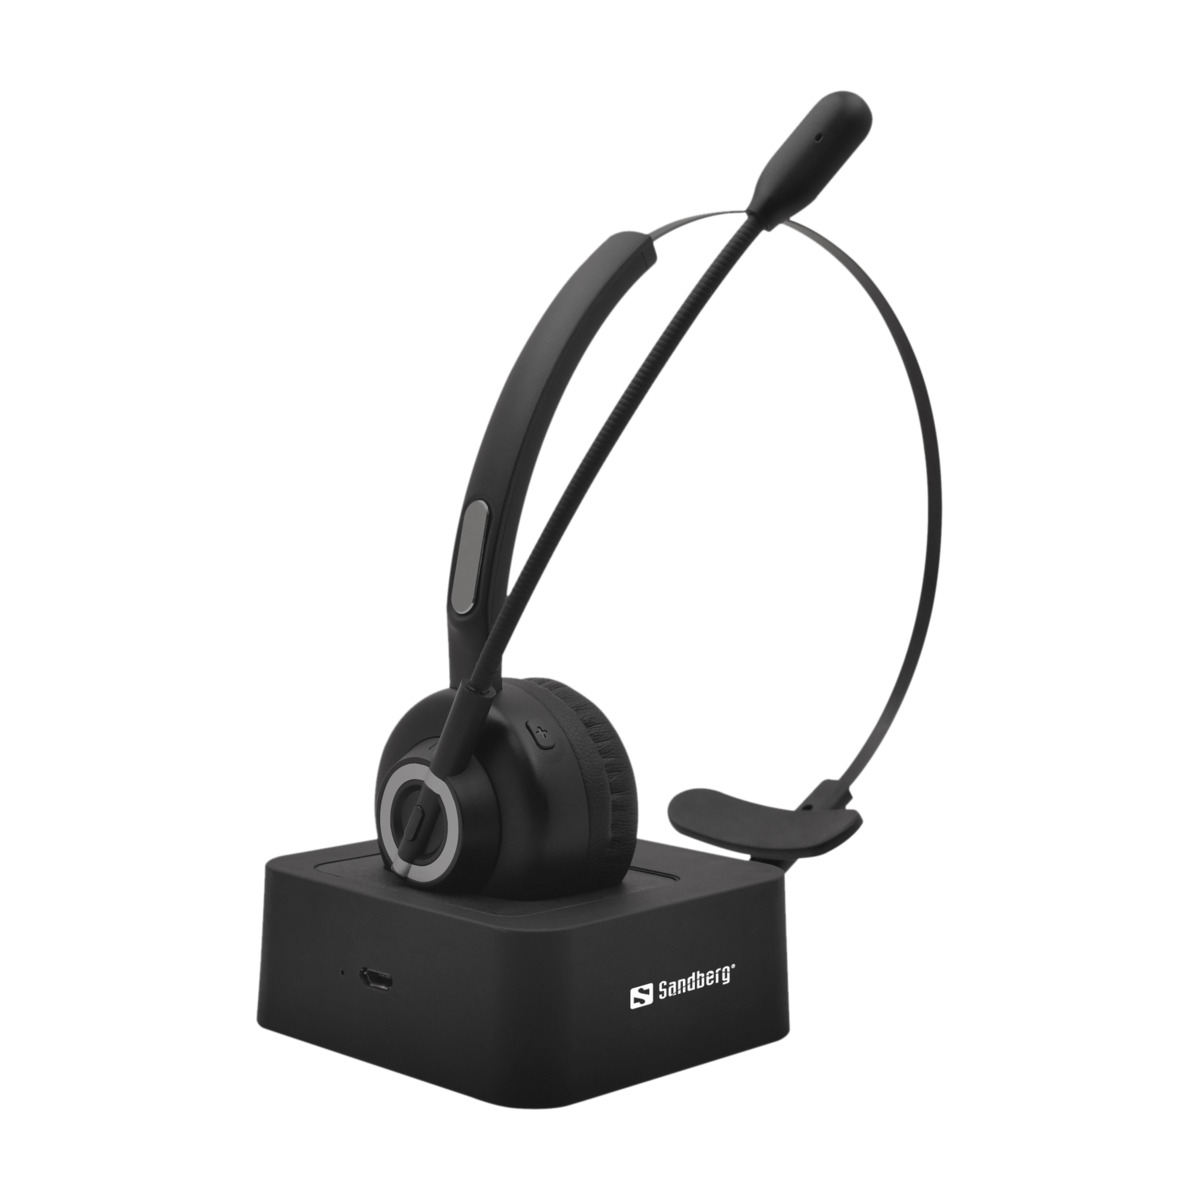 Sandberg Bluetooth Office headset pro